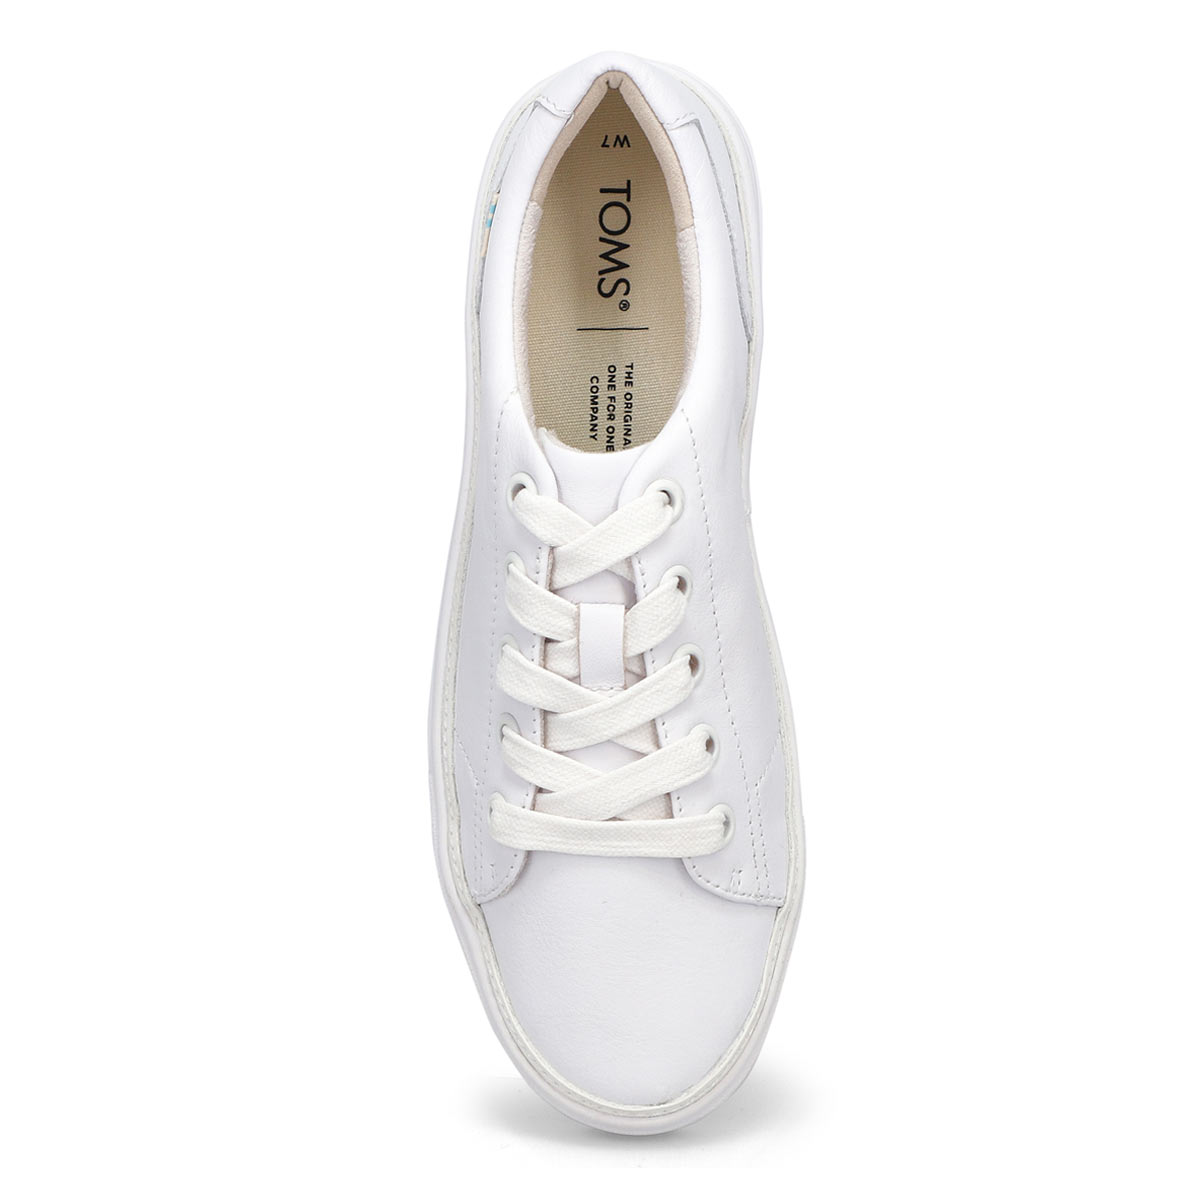 TOMS Women's Alex Sneaker - White Leather | SoftMoc.com